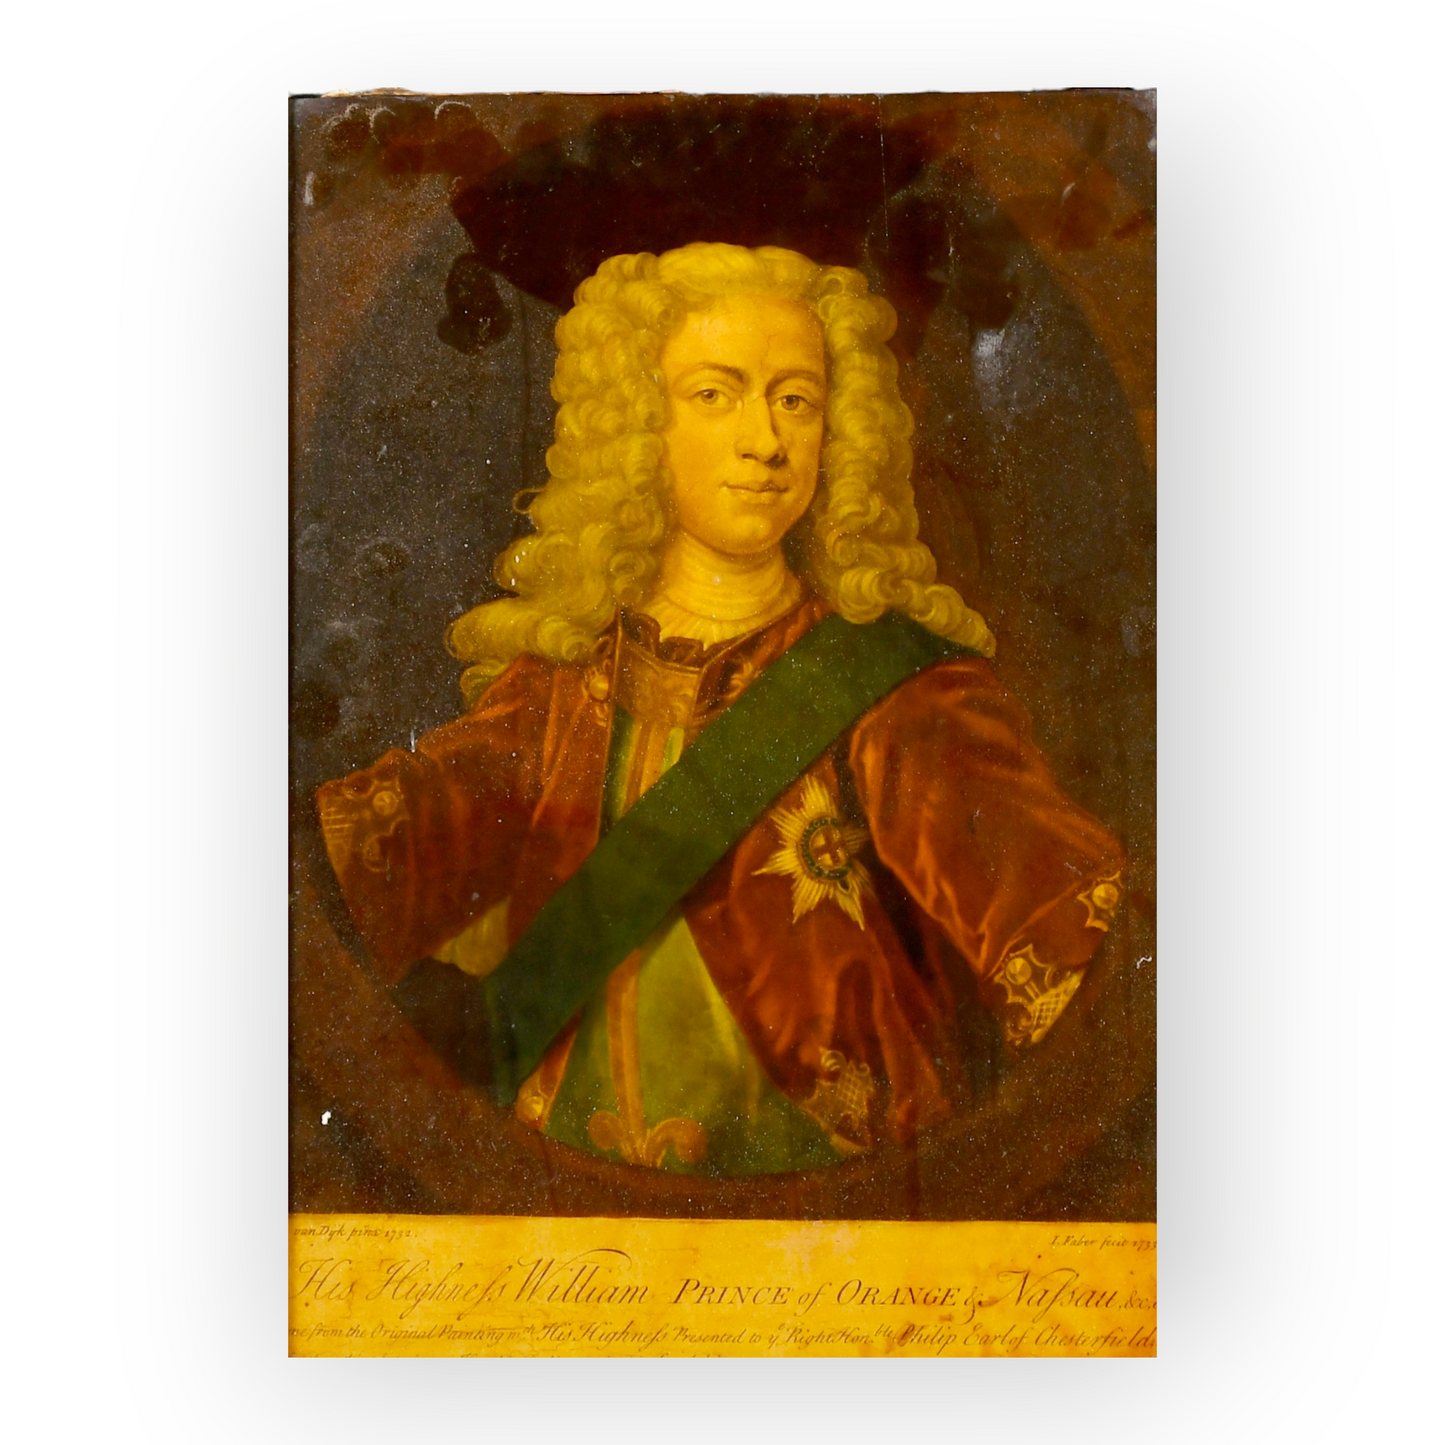 18th Century English Antique Reverse Print on Glass of William, Prince of Orange, circa 1732-1733